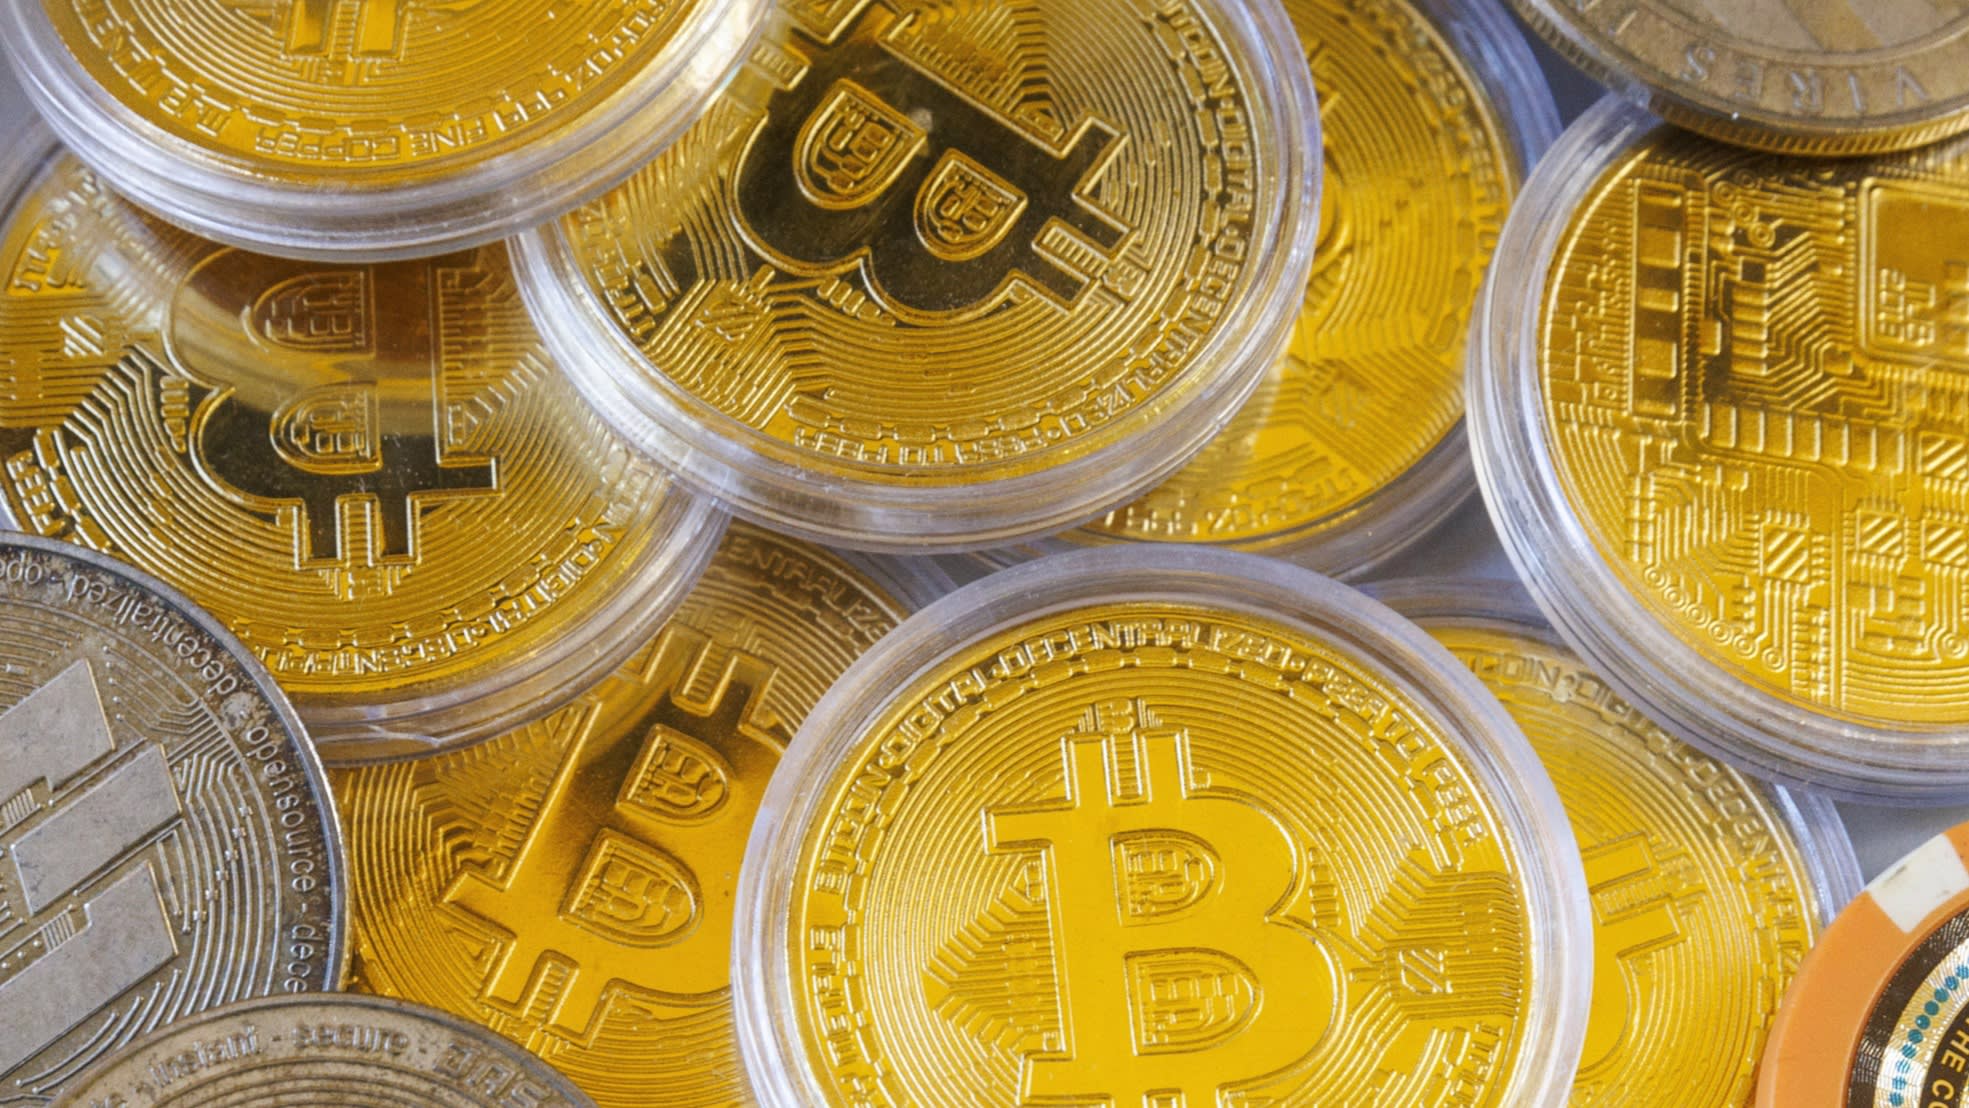 BC Bitcoin | Best Bitcoin Broker | Website To Buy Bitcoin